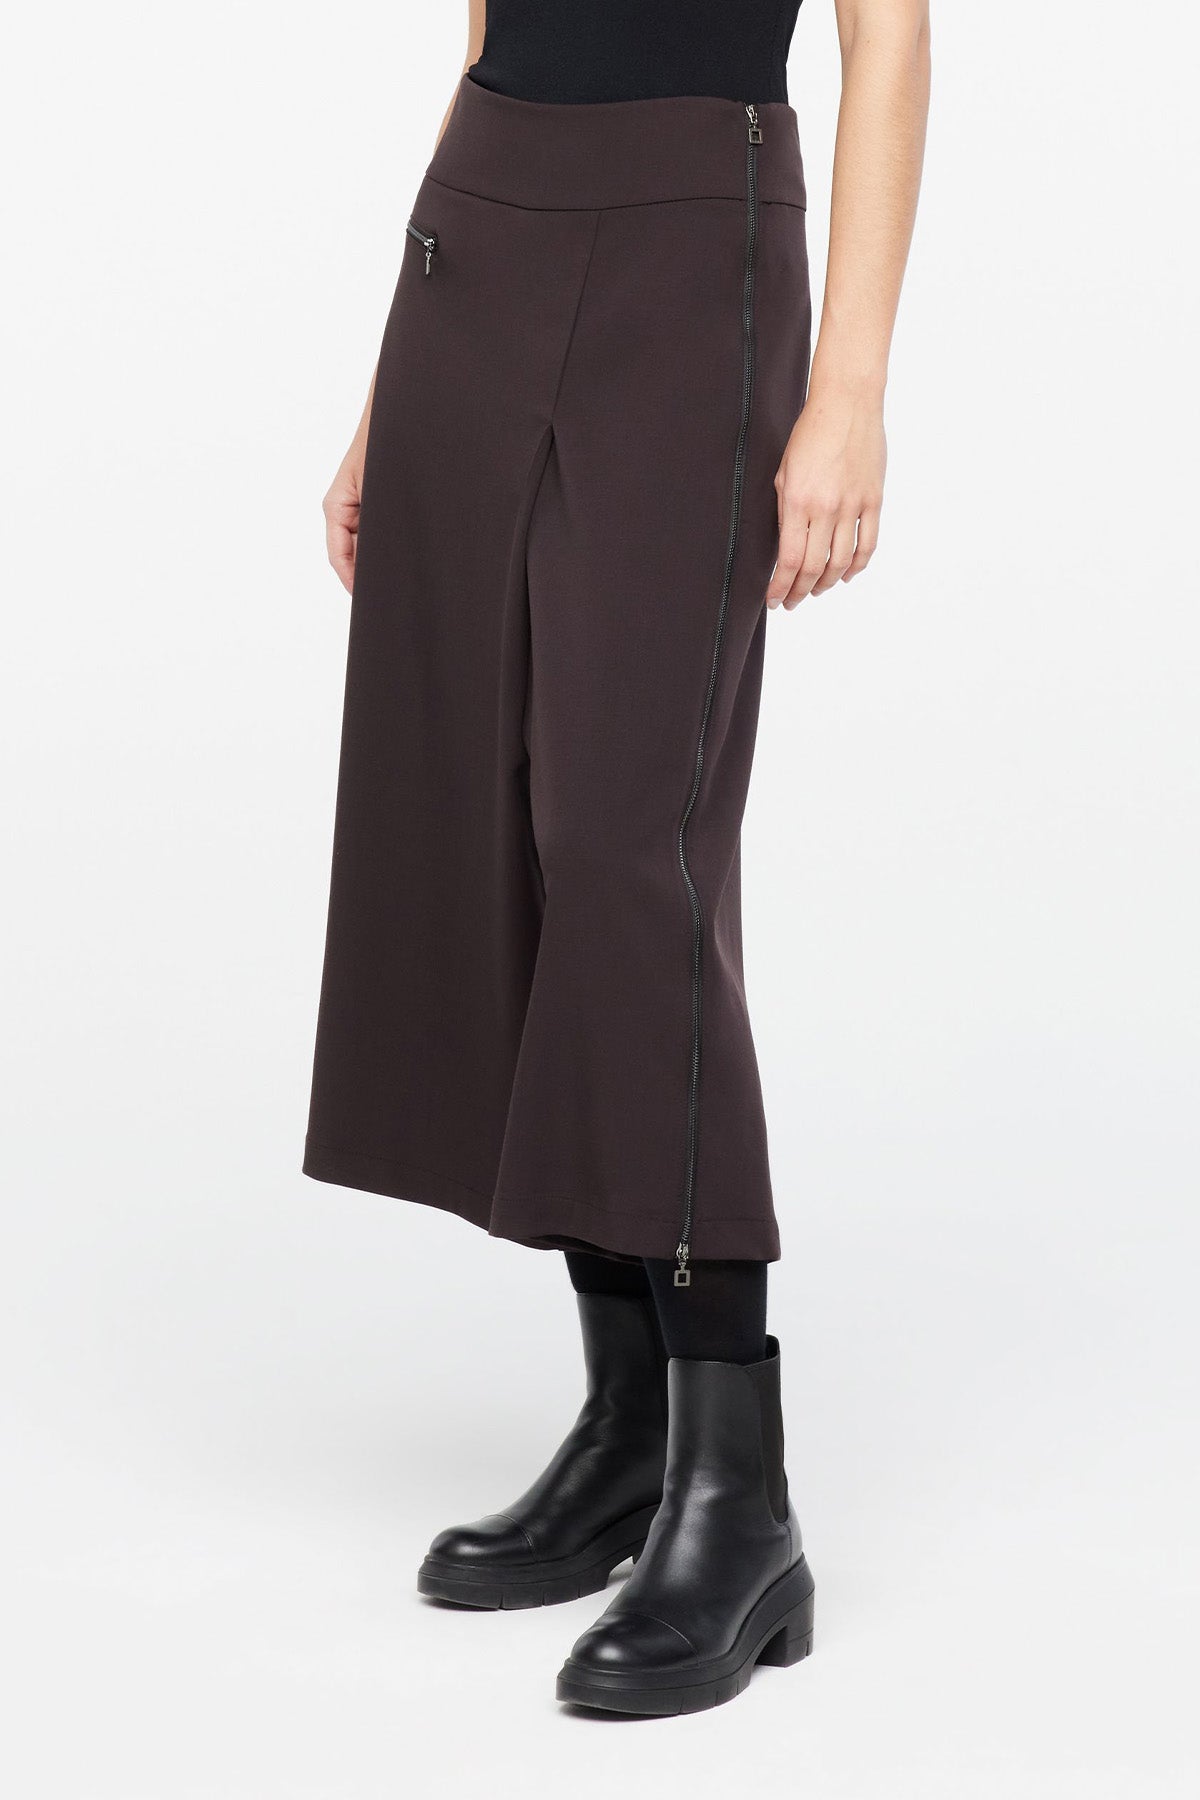 Sarah Pacini Fermuar Detaylı Crop Yün Pantolon-Libas Trendy Fashion Store